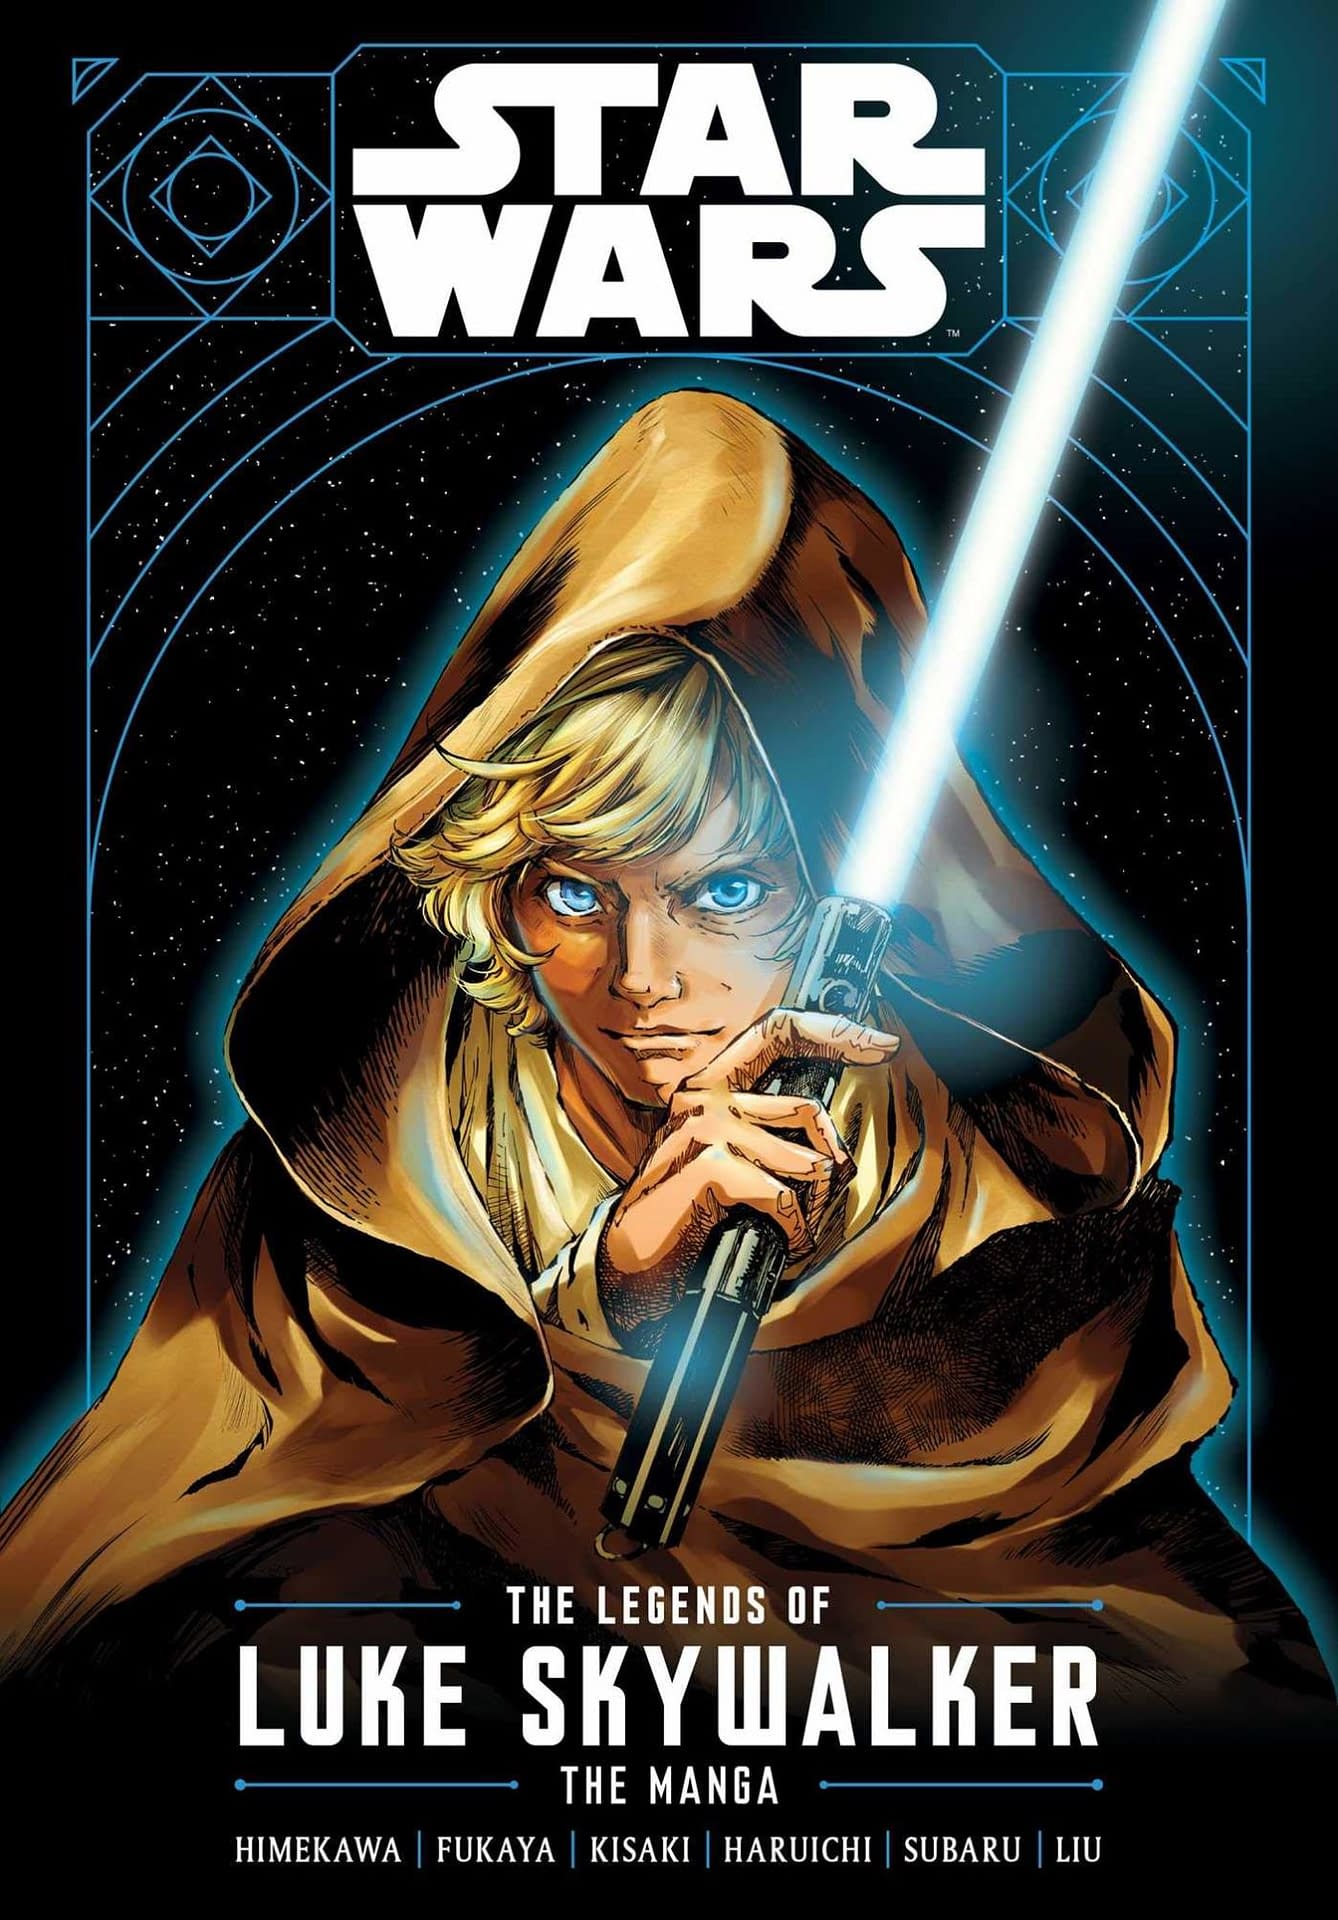 "Star Wars: The Legends of Luke Skywalker" Manga Offers Light Side Stories for Hardcore Fans [Review]